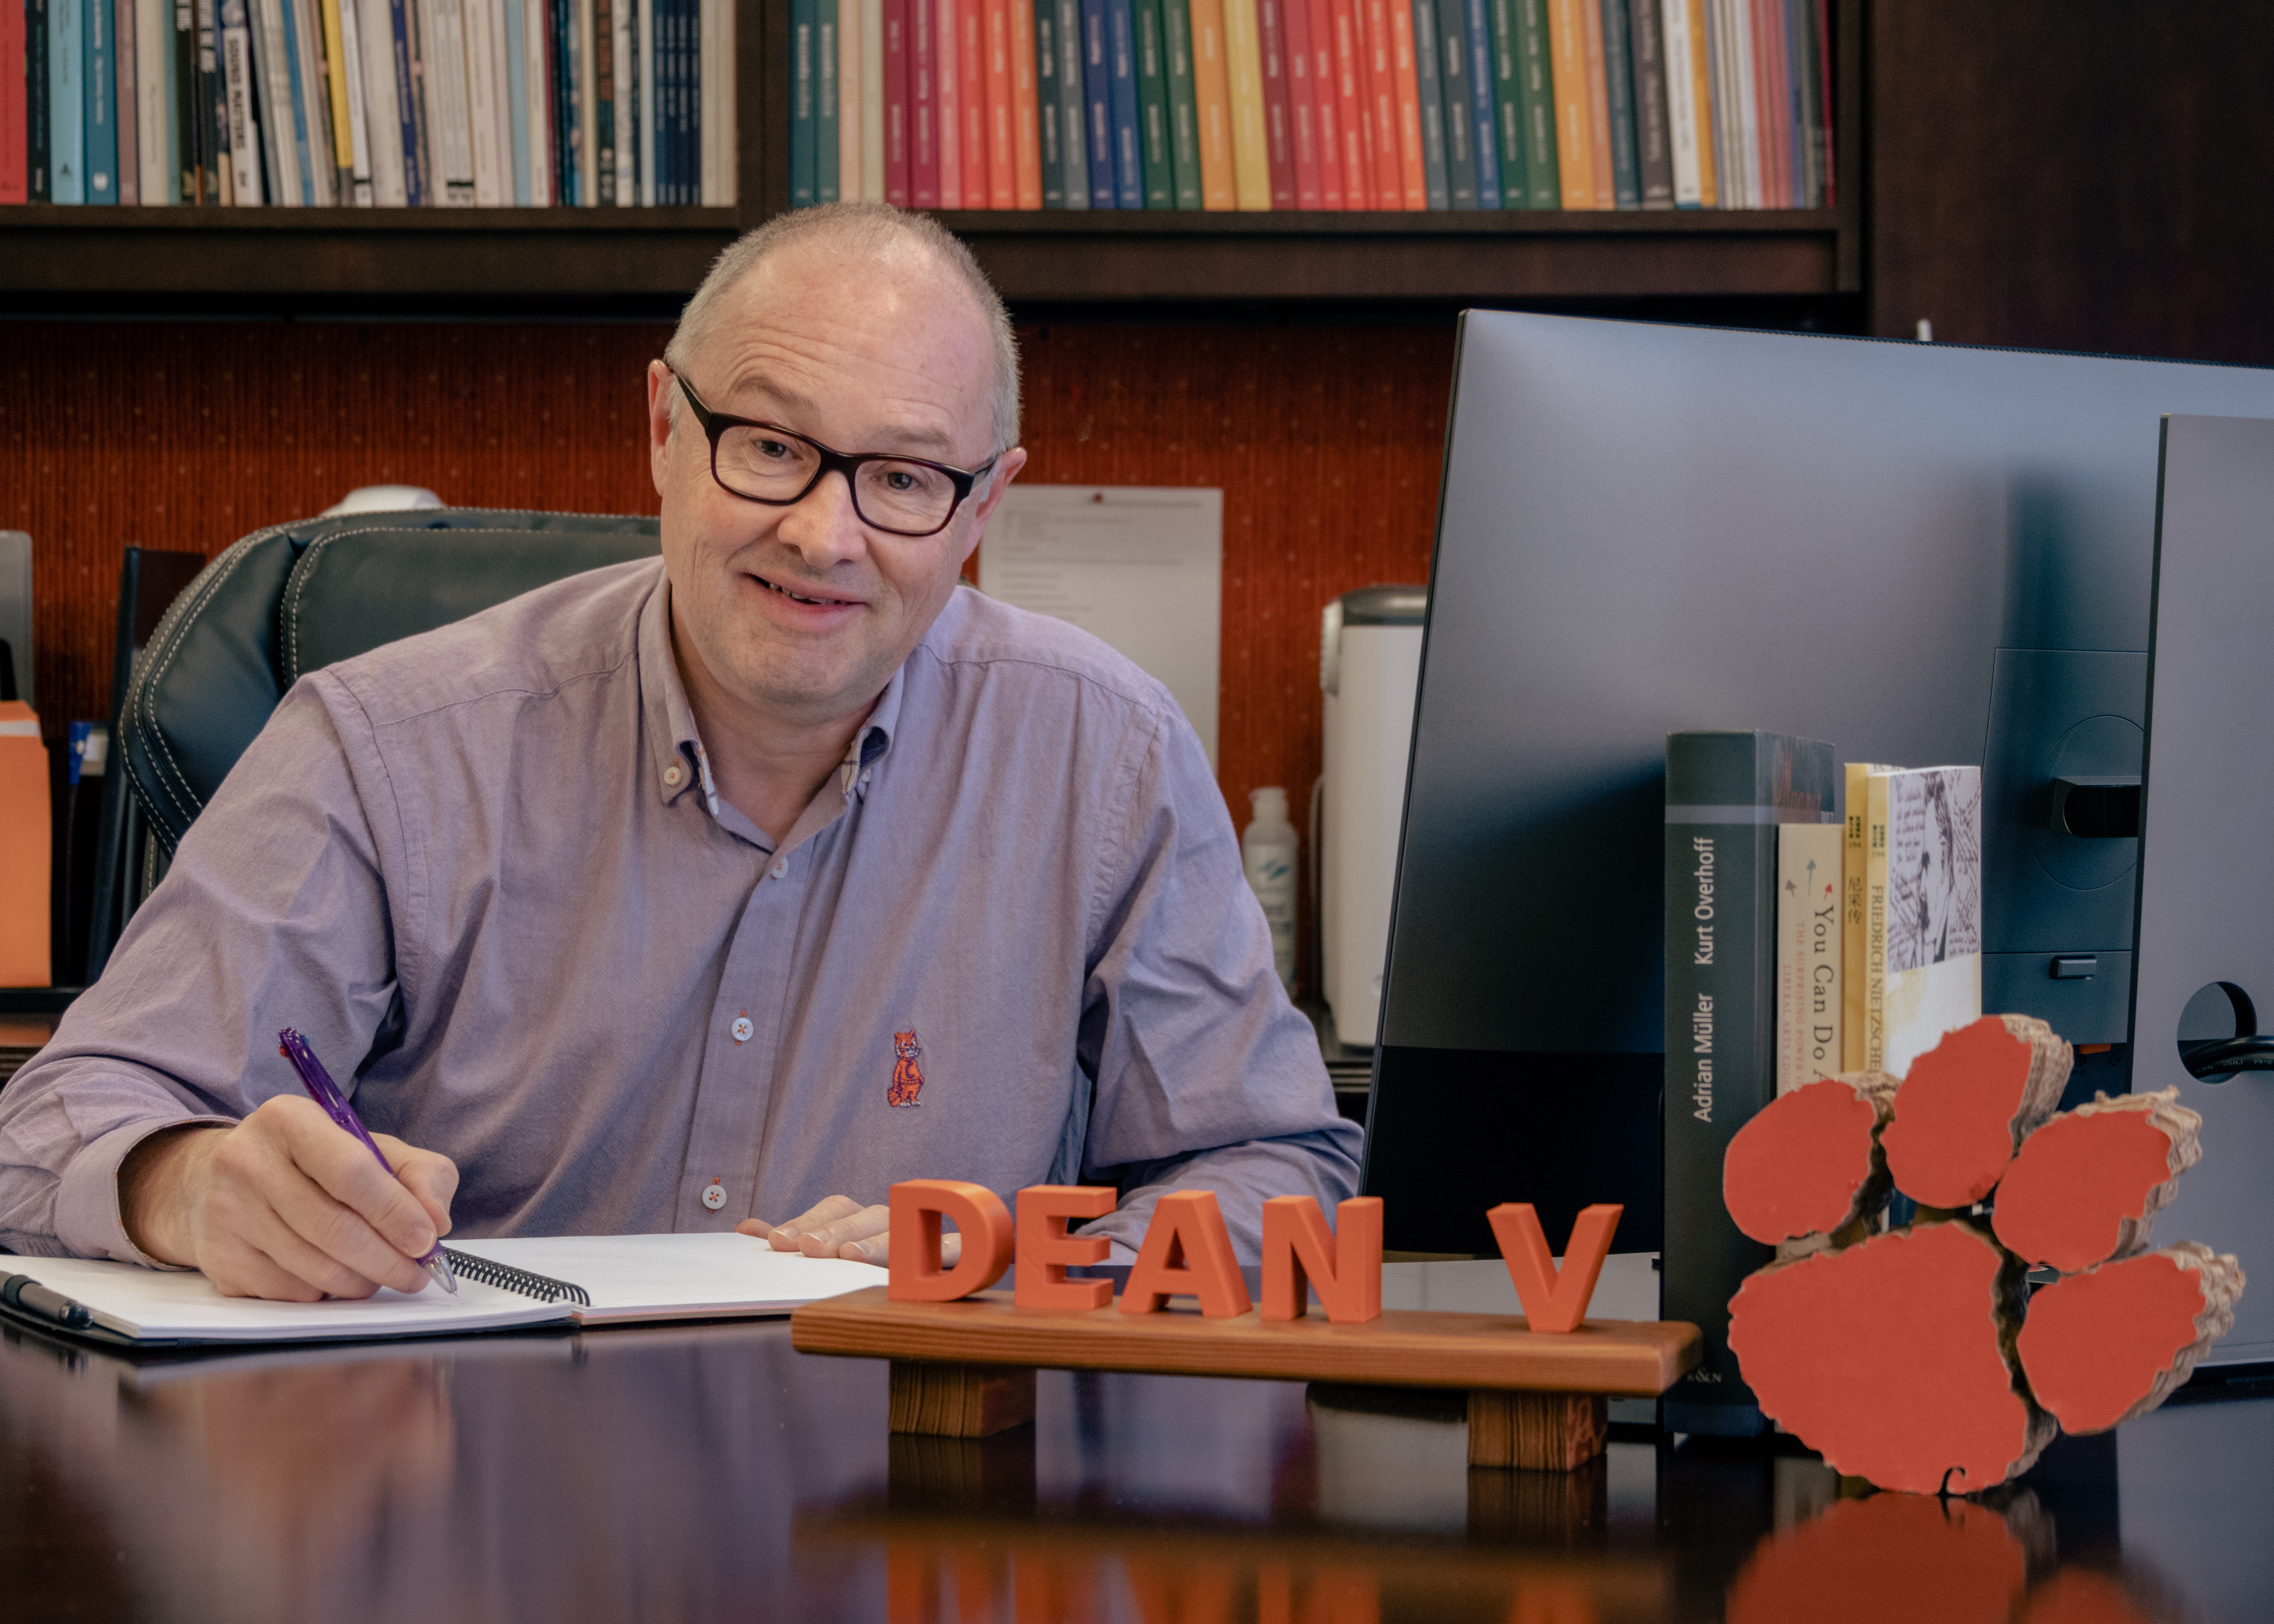 Dean Vazsonyi at desk writing